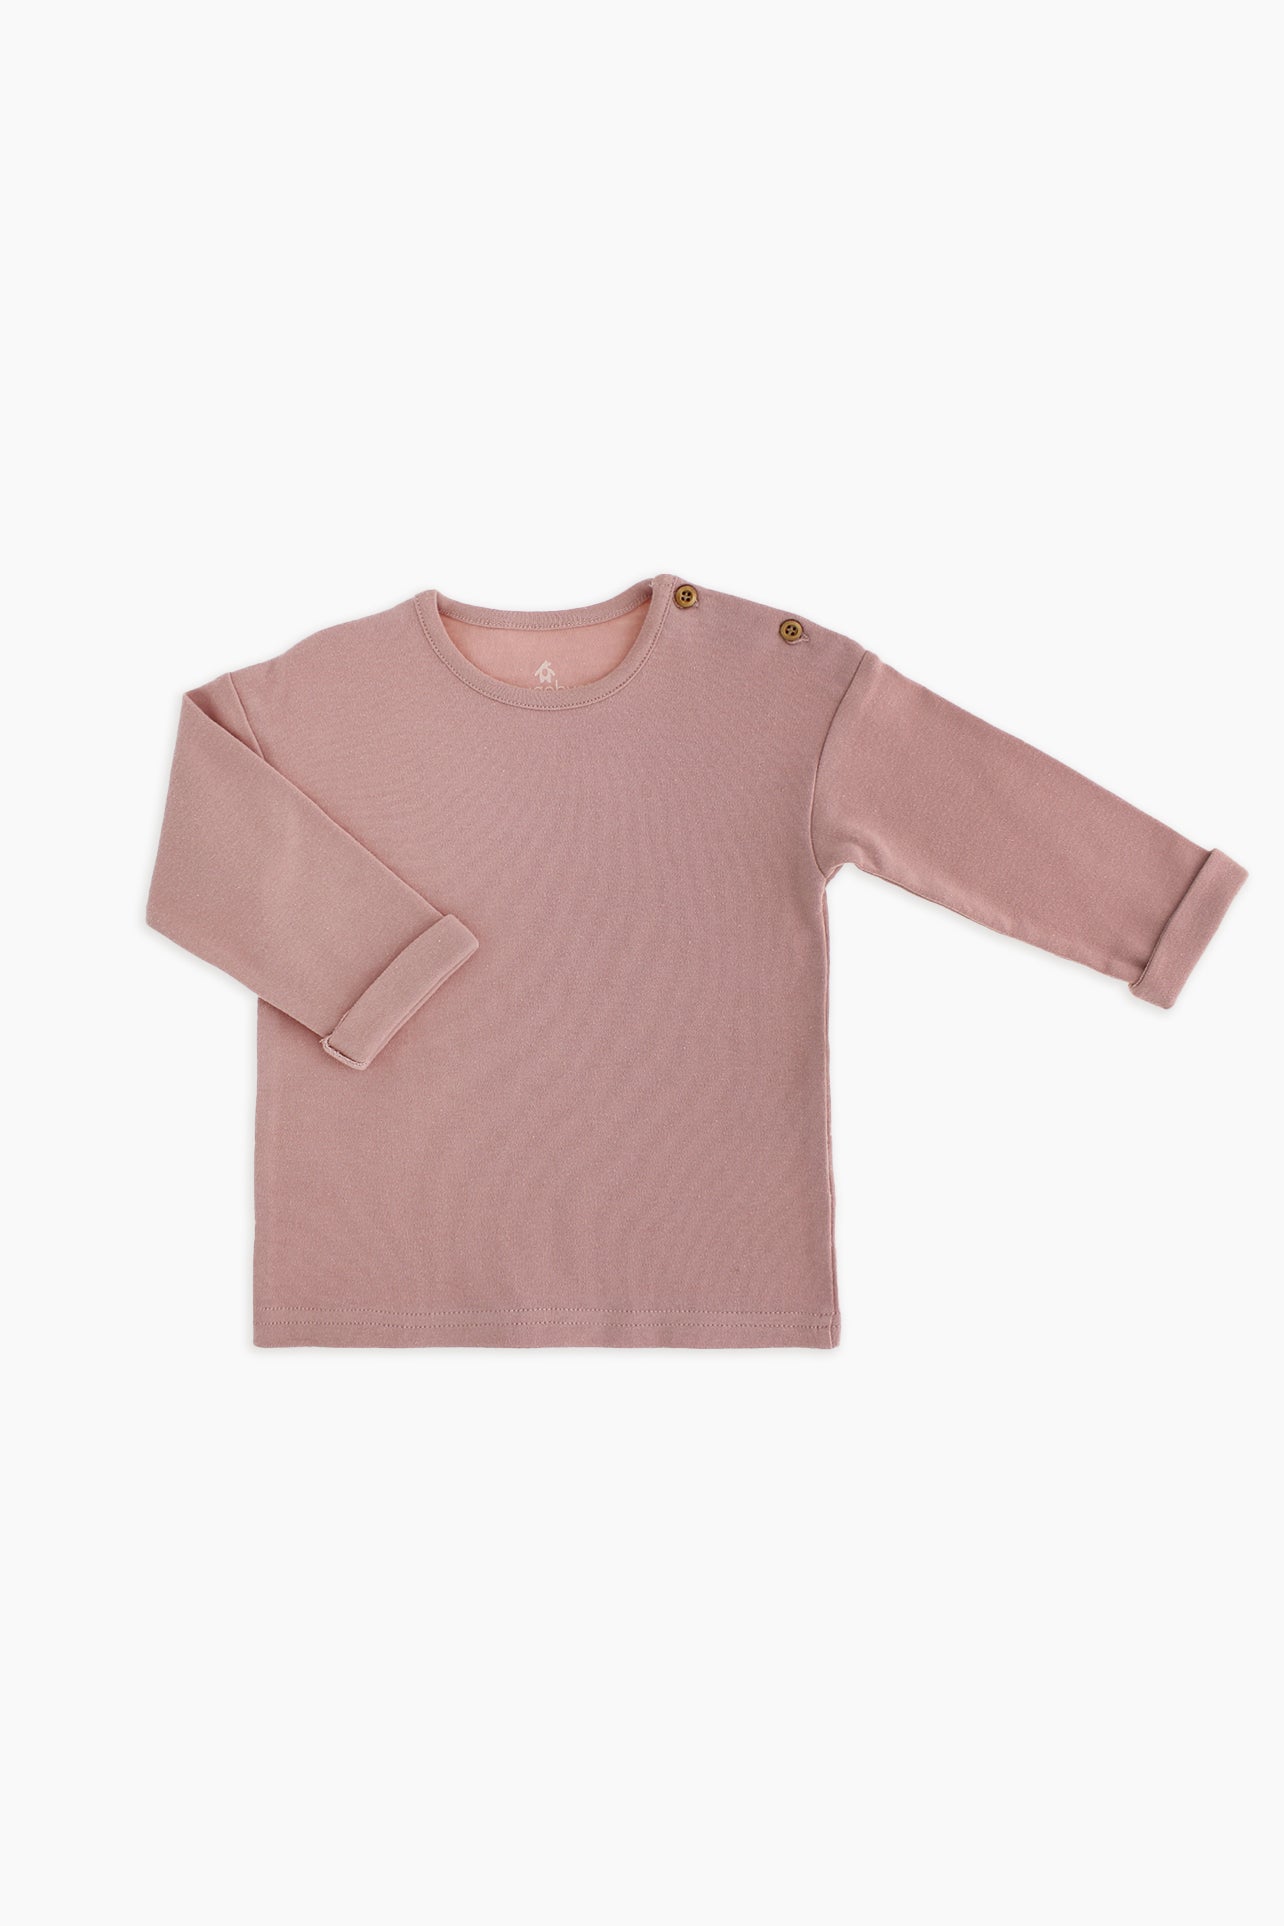 Organic Cotton Toddler Long Sleeve T-Shirt